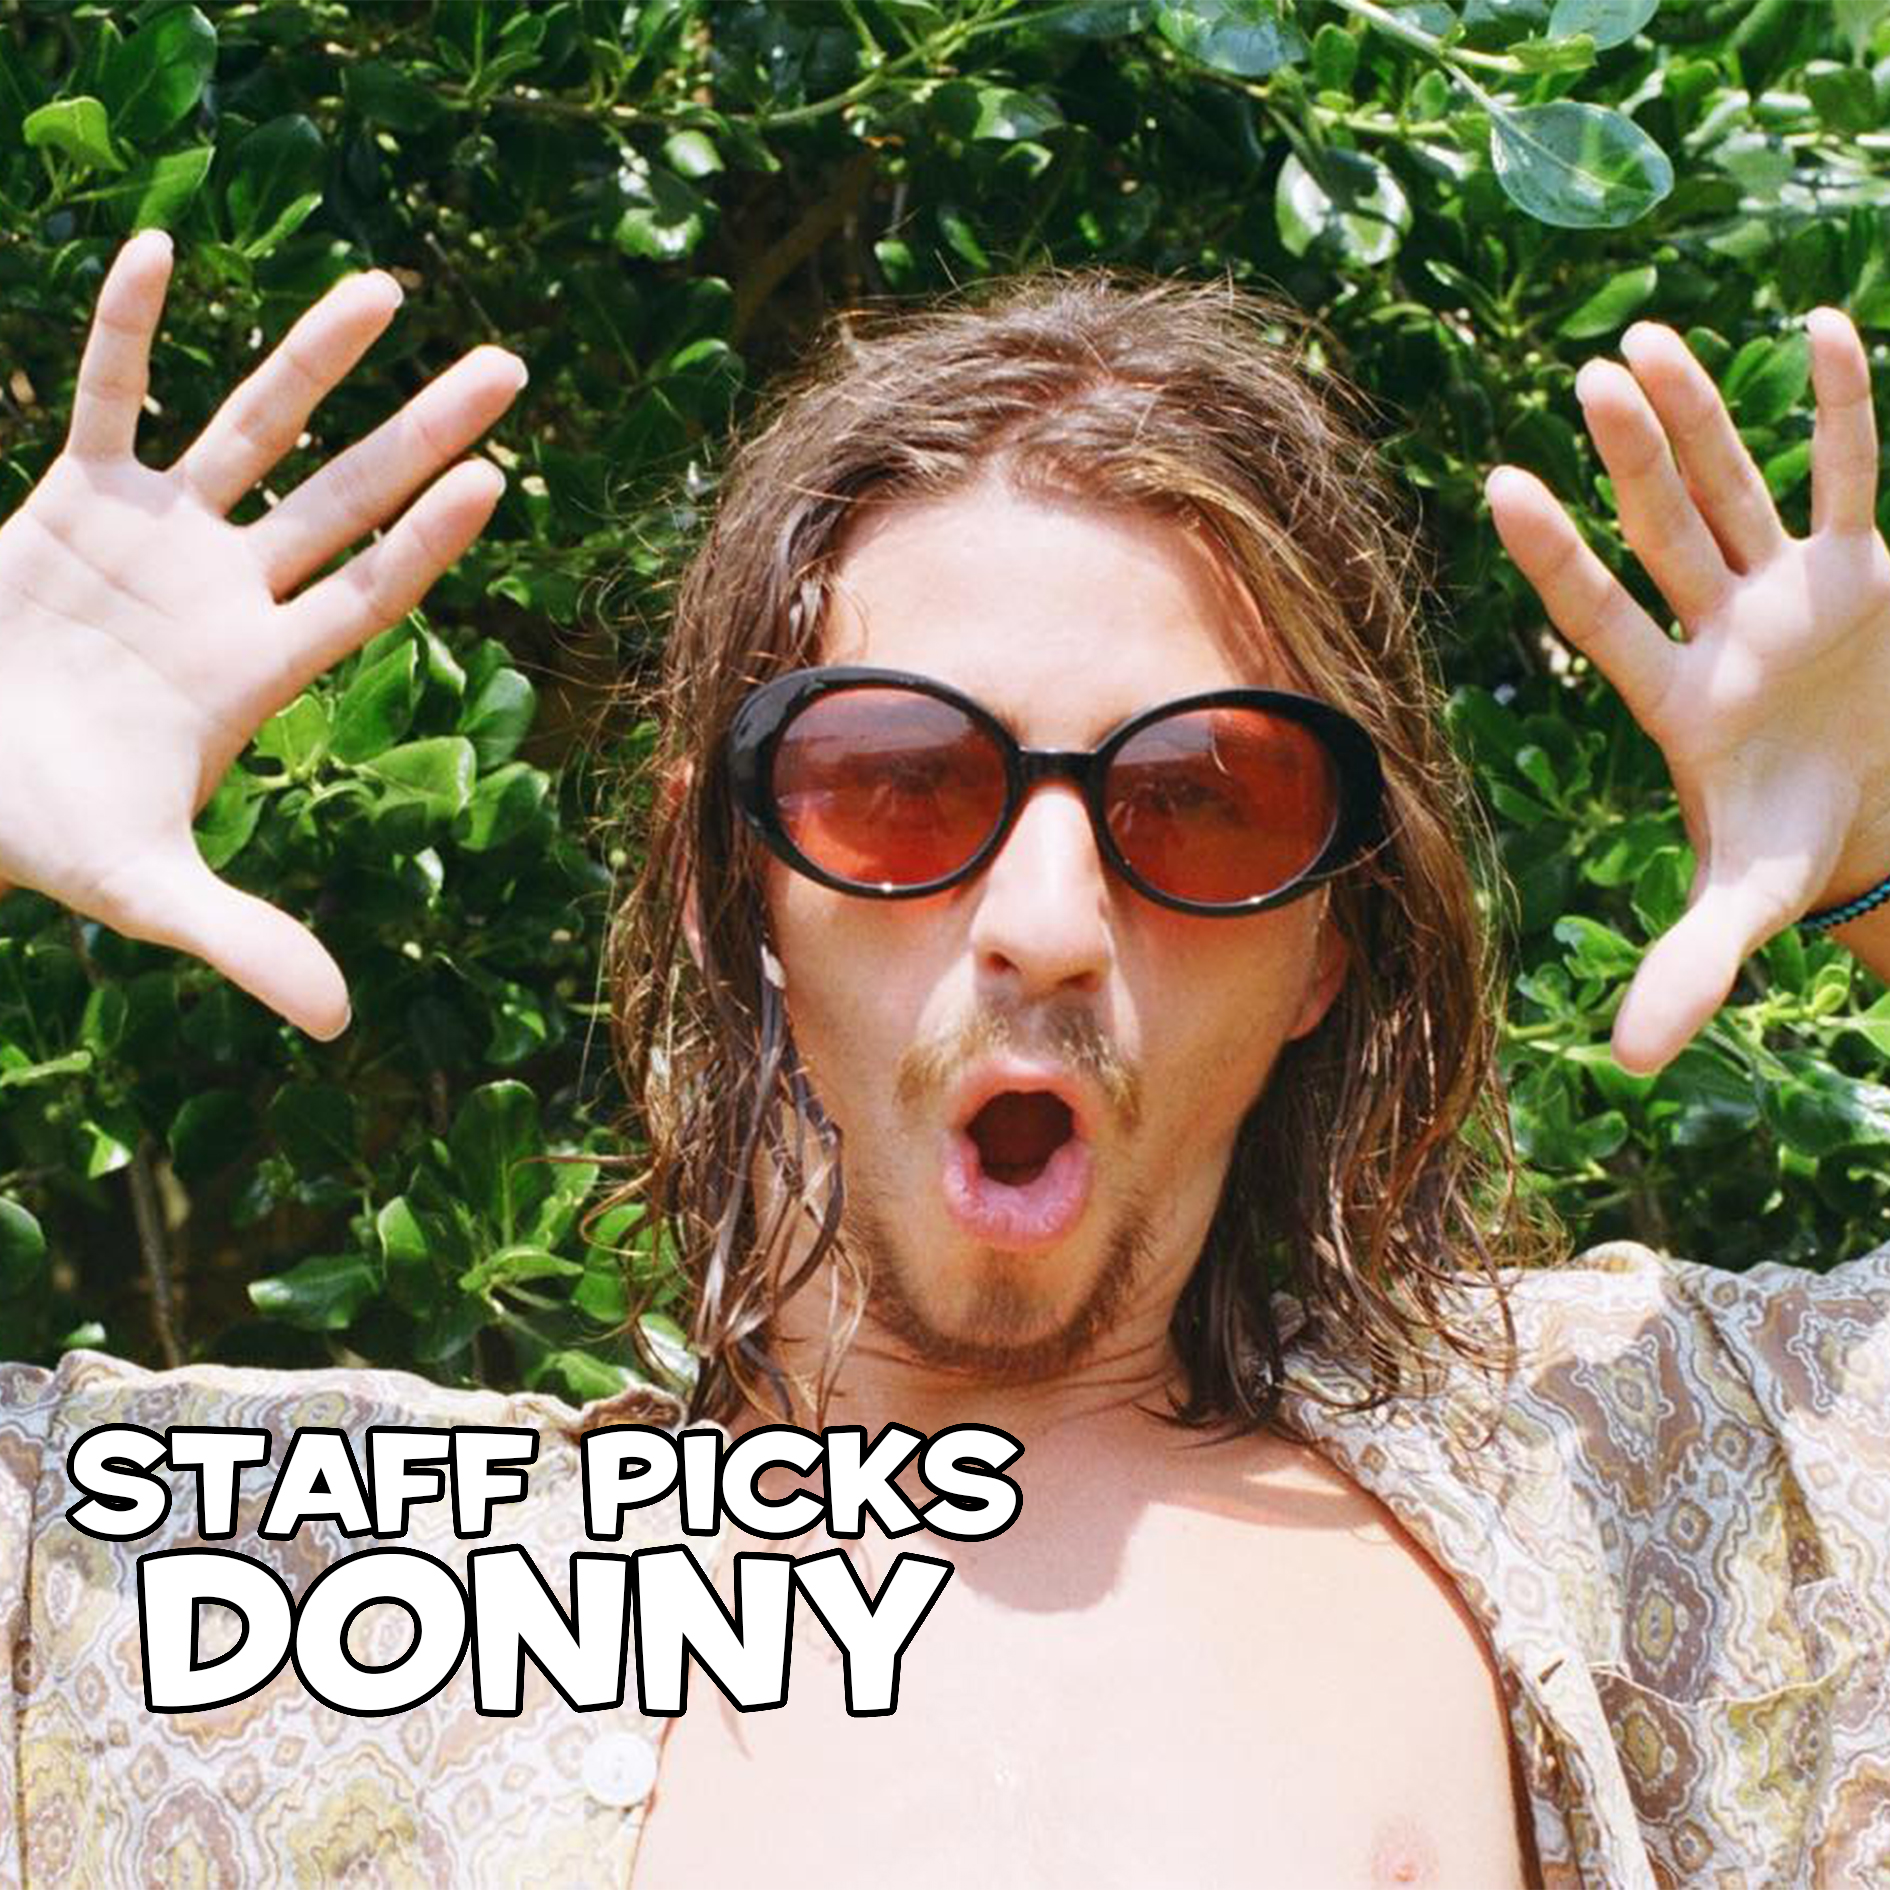 Donny's Staff Picks